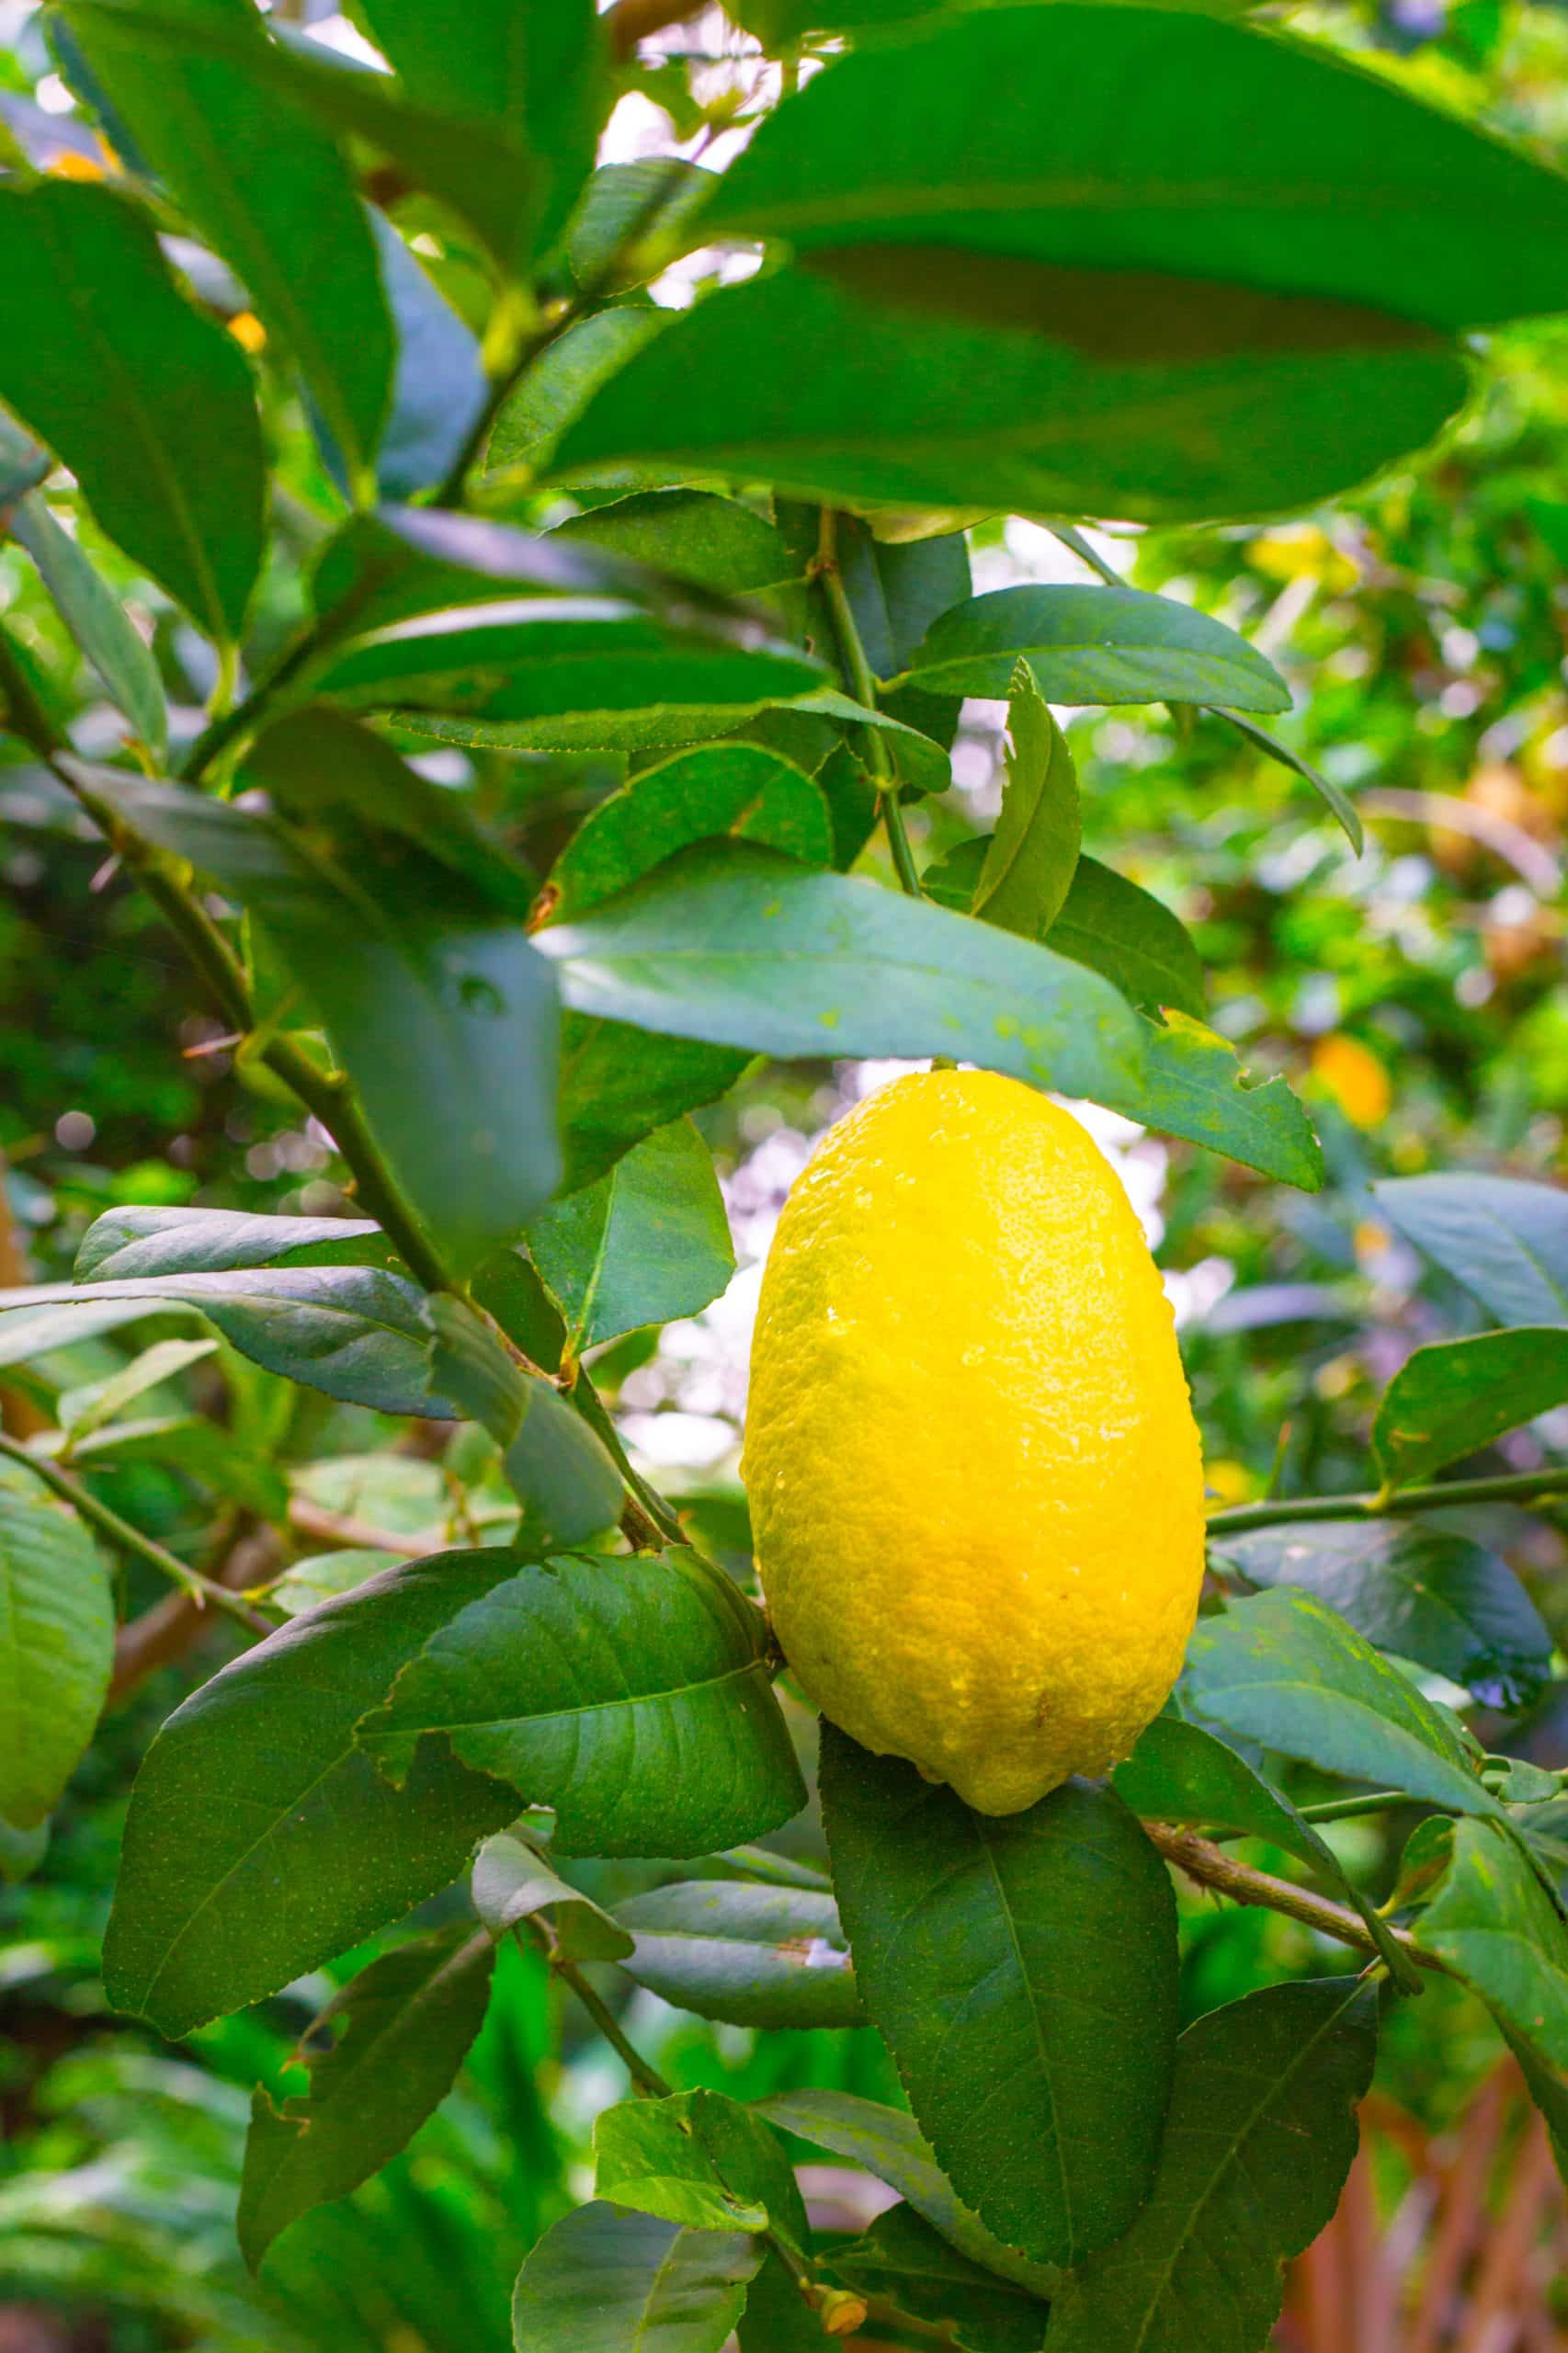 limon amarillo brillante crece arbol jardin tropical fruta acida rica vitamina c scaled